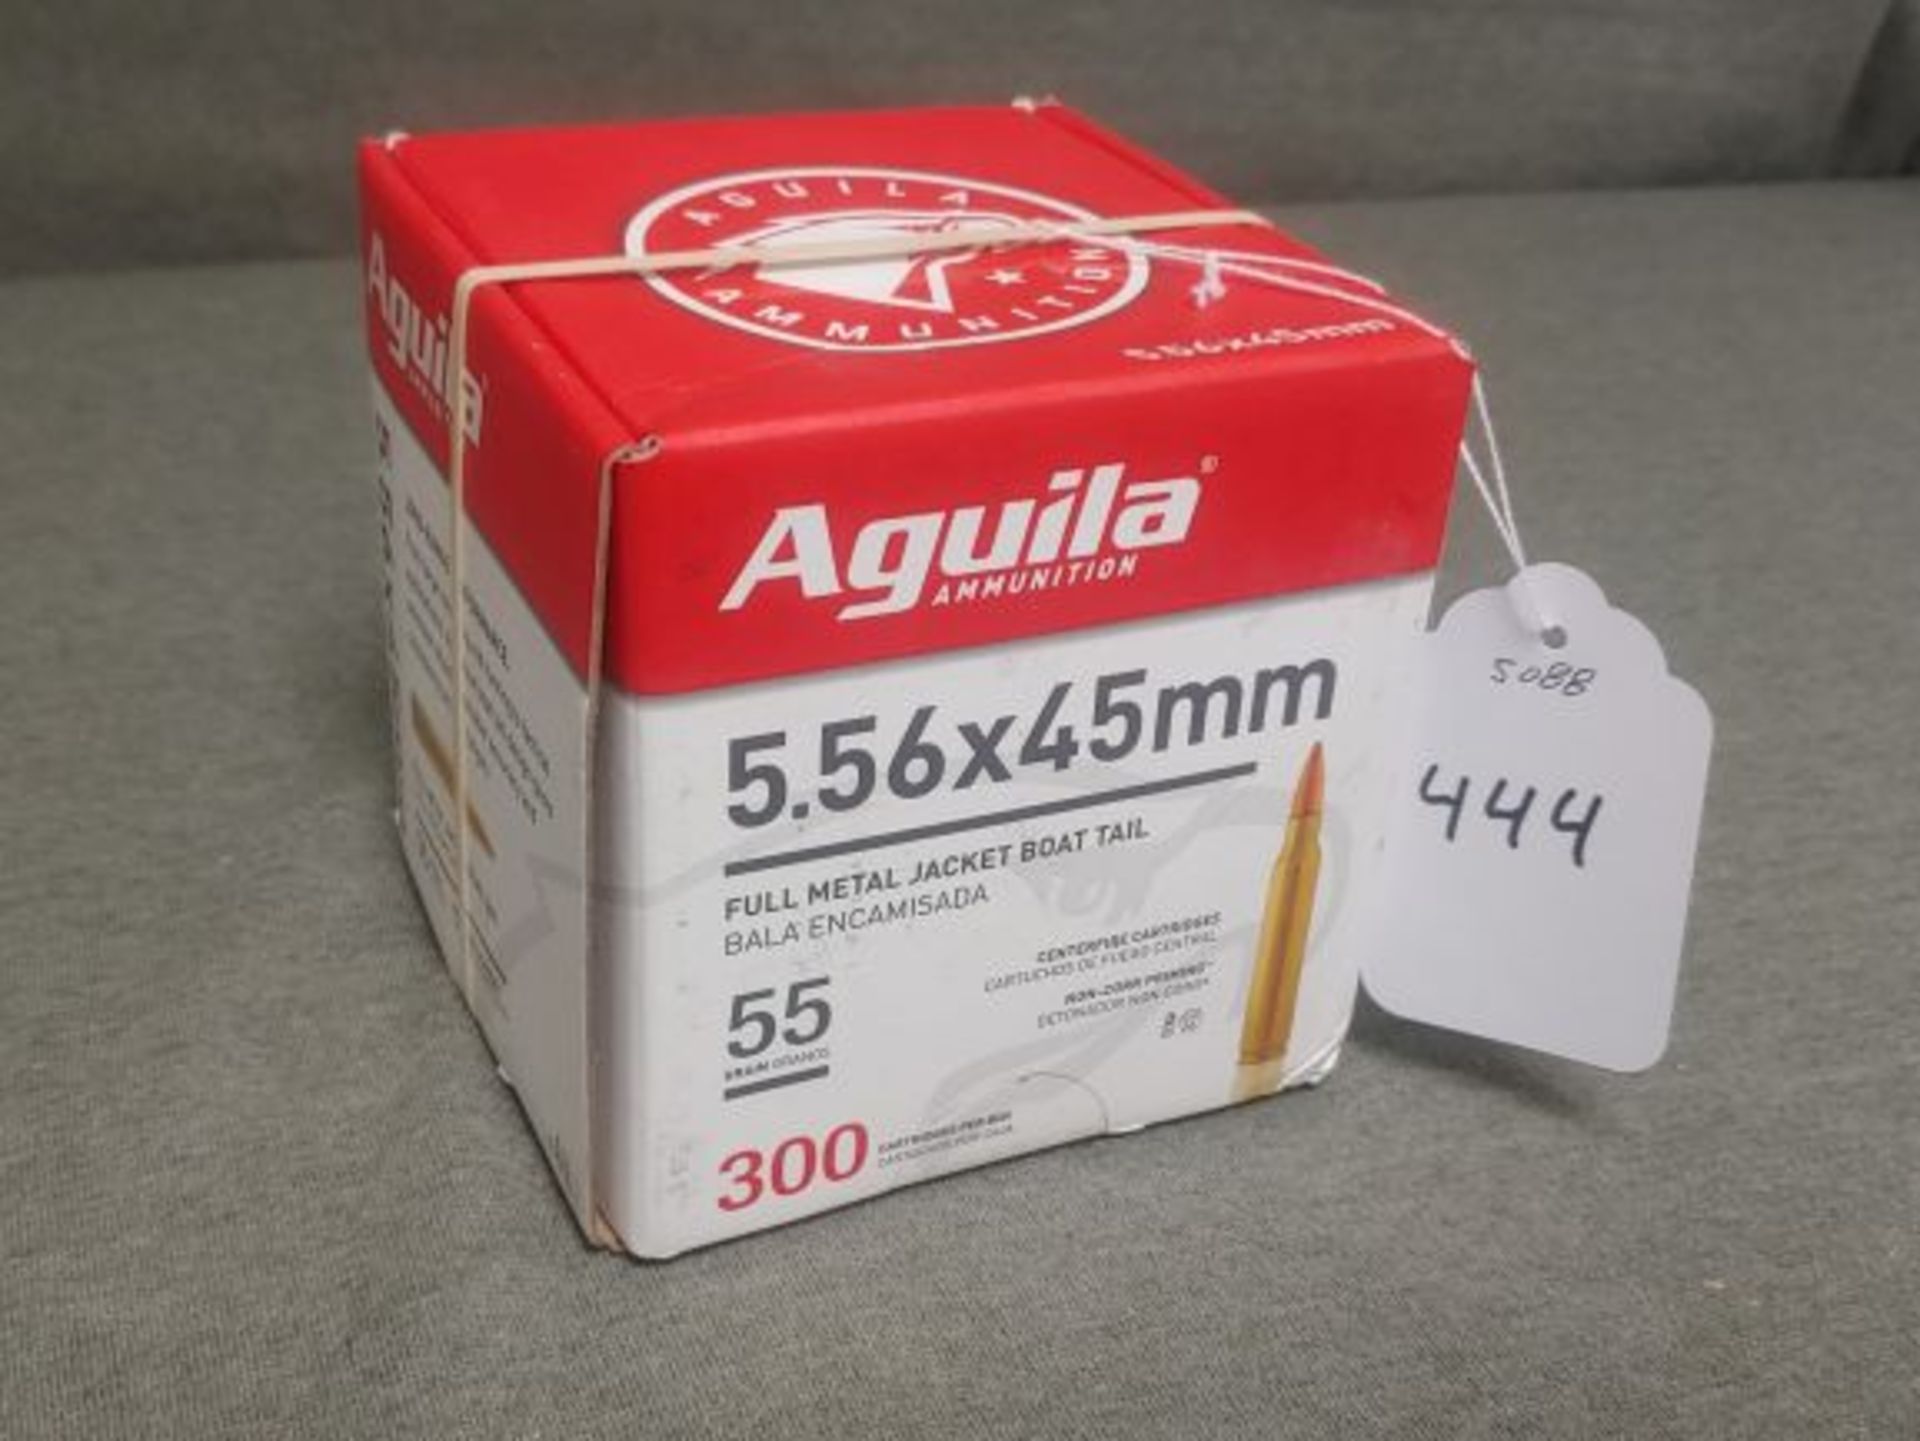 444. Aguila 5.56x45mm FMJBT 55gr., 300 Rnd. Box (1x the Money)